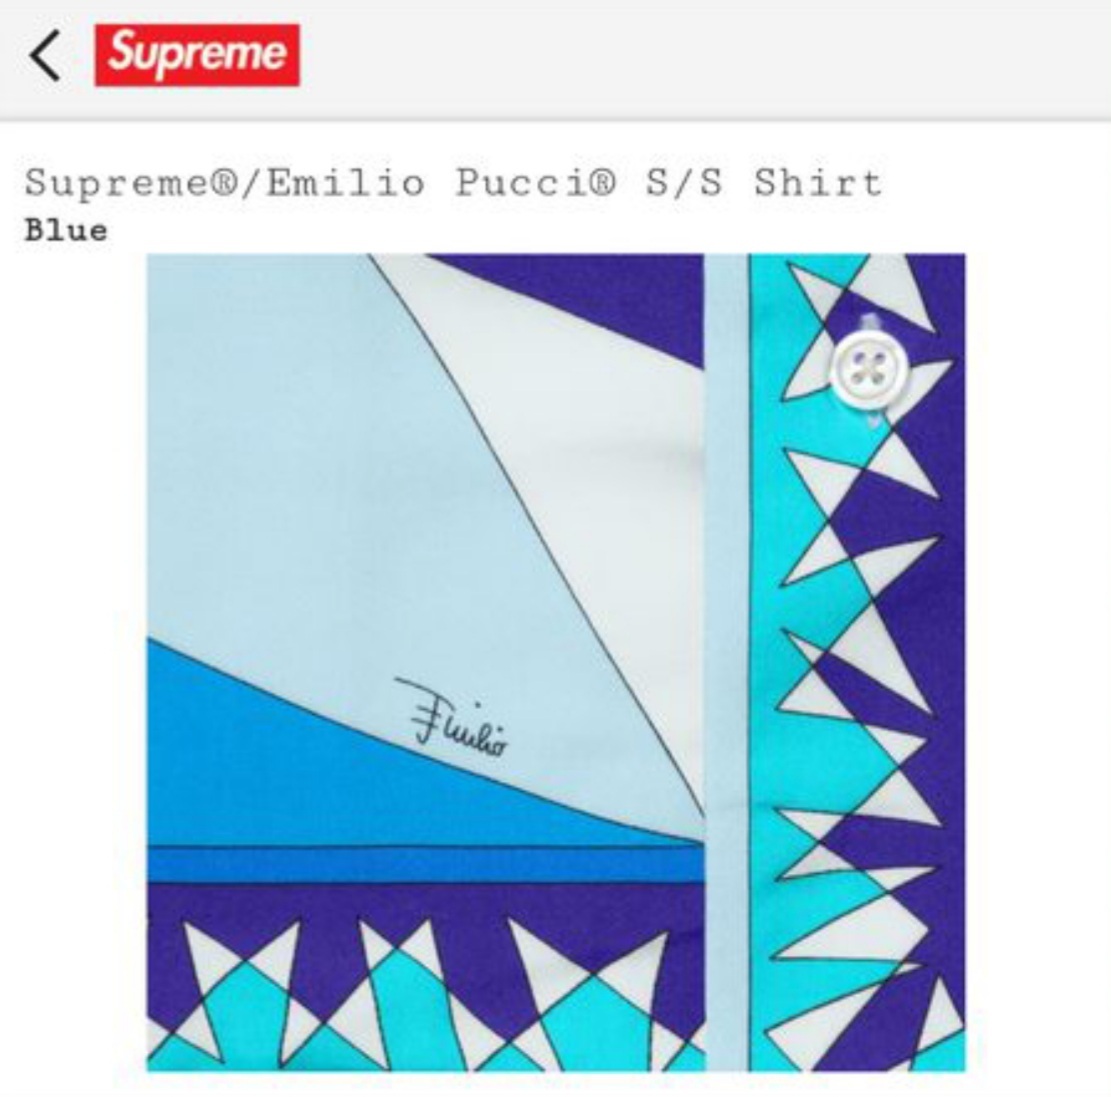 21S/S Supreme EMILIO PUCCI S/S Shirt(S・BLUE) EMILIO PUCCIオンライン購入 新品・未試着 シュプリーム エミリオ プッチ シャツ 青_画像3